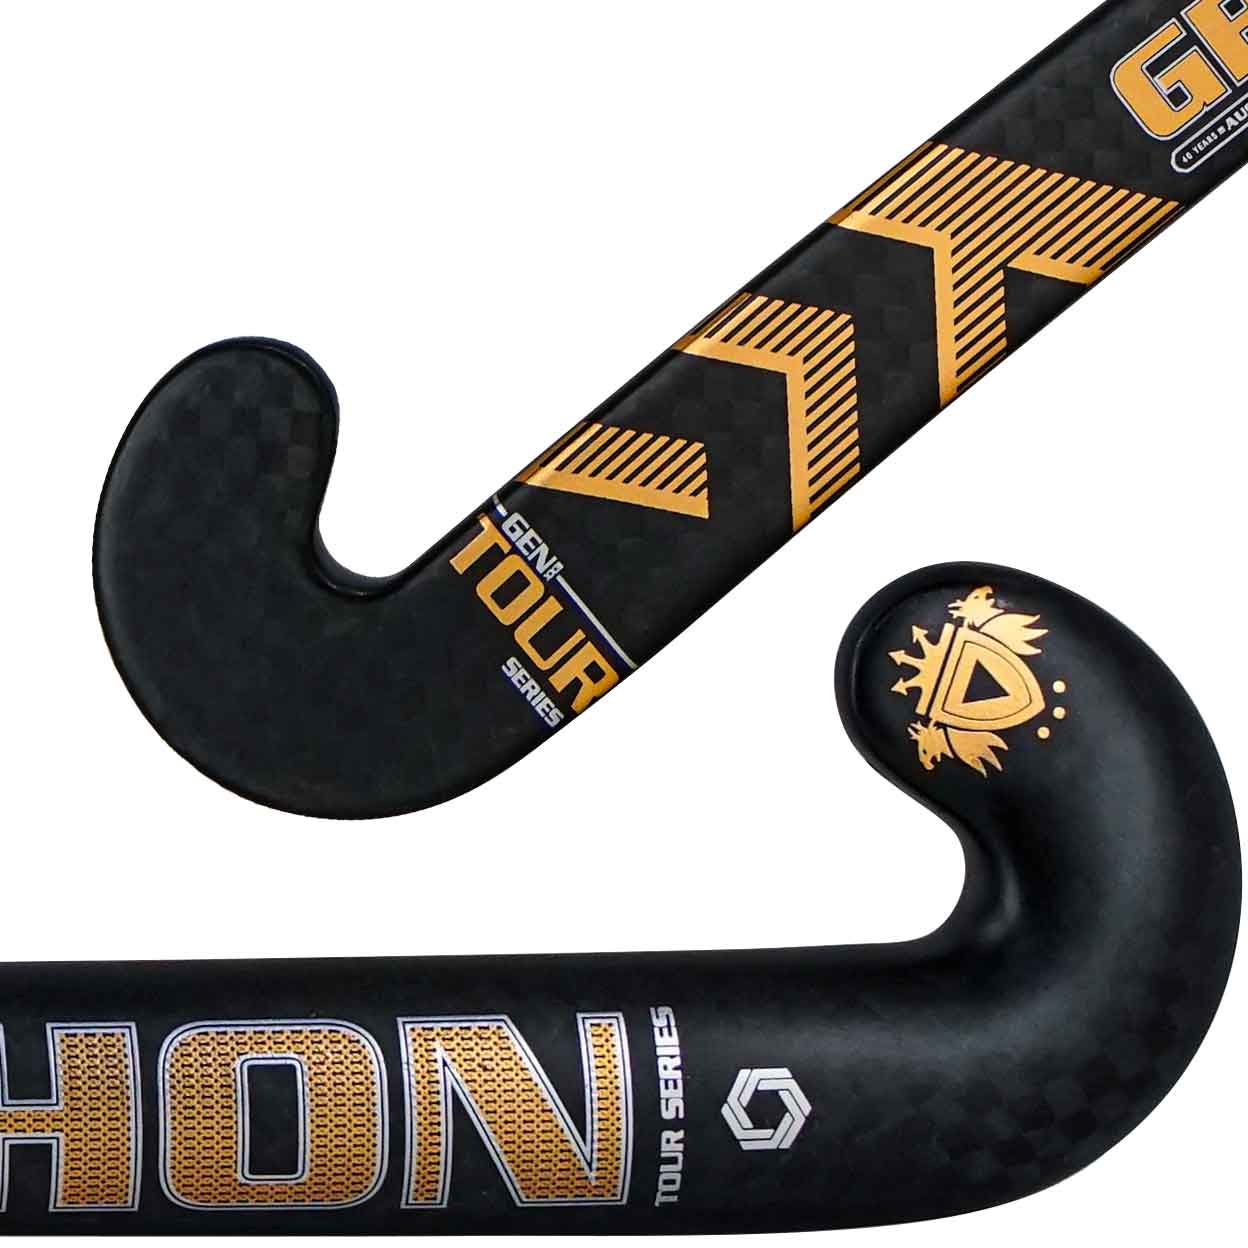 Close up of the Gryphon Tour Samurai Composite Field Hockey Stick